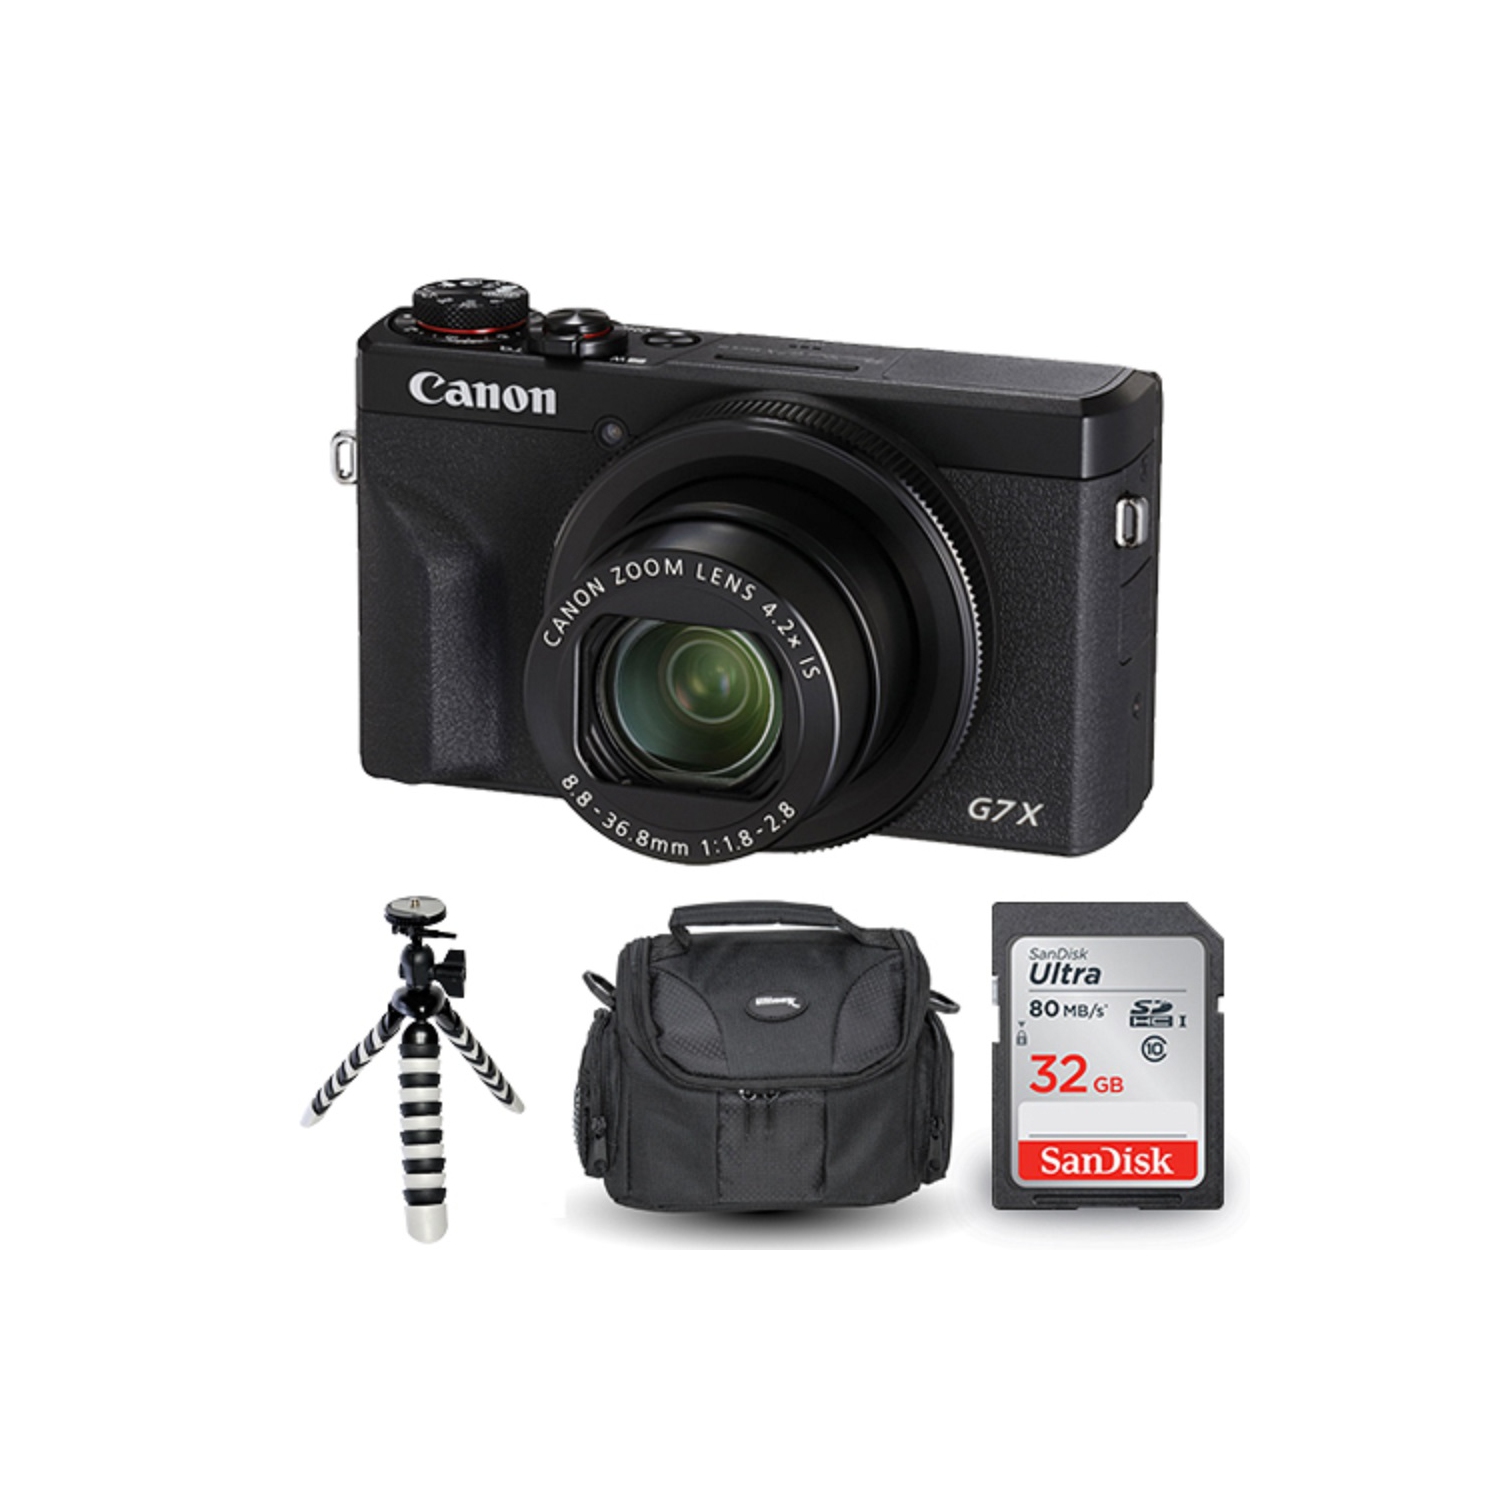 Canon PowerShot G7 X Mark III Digital Camera (Black) + 32GB + 